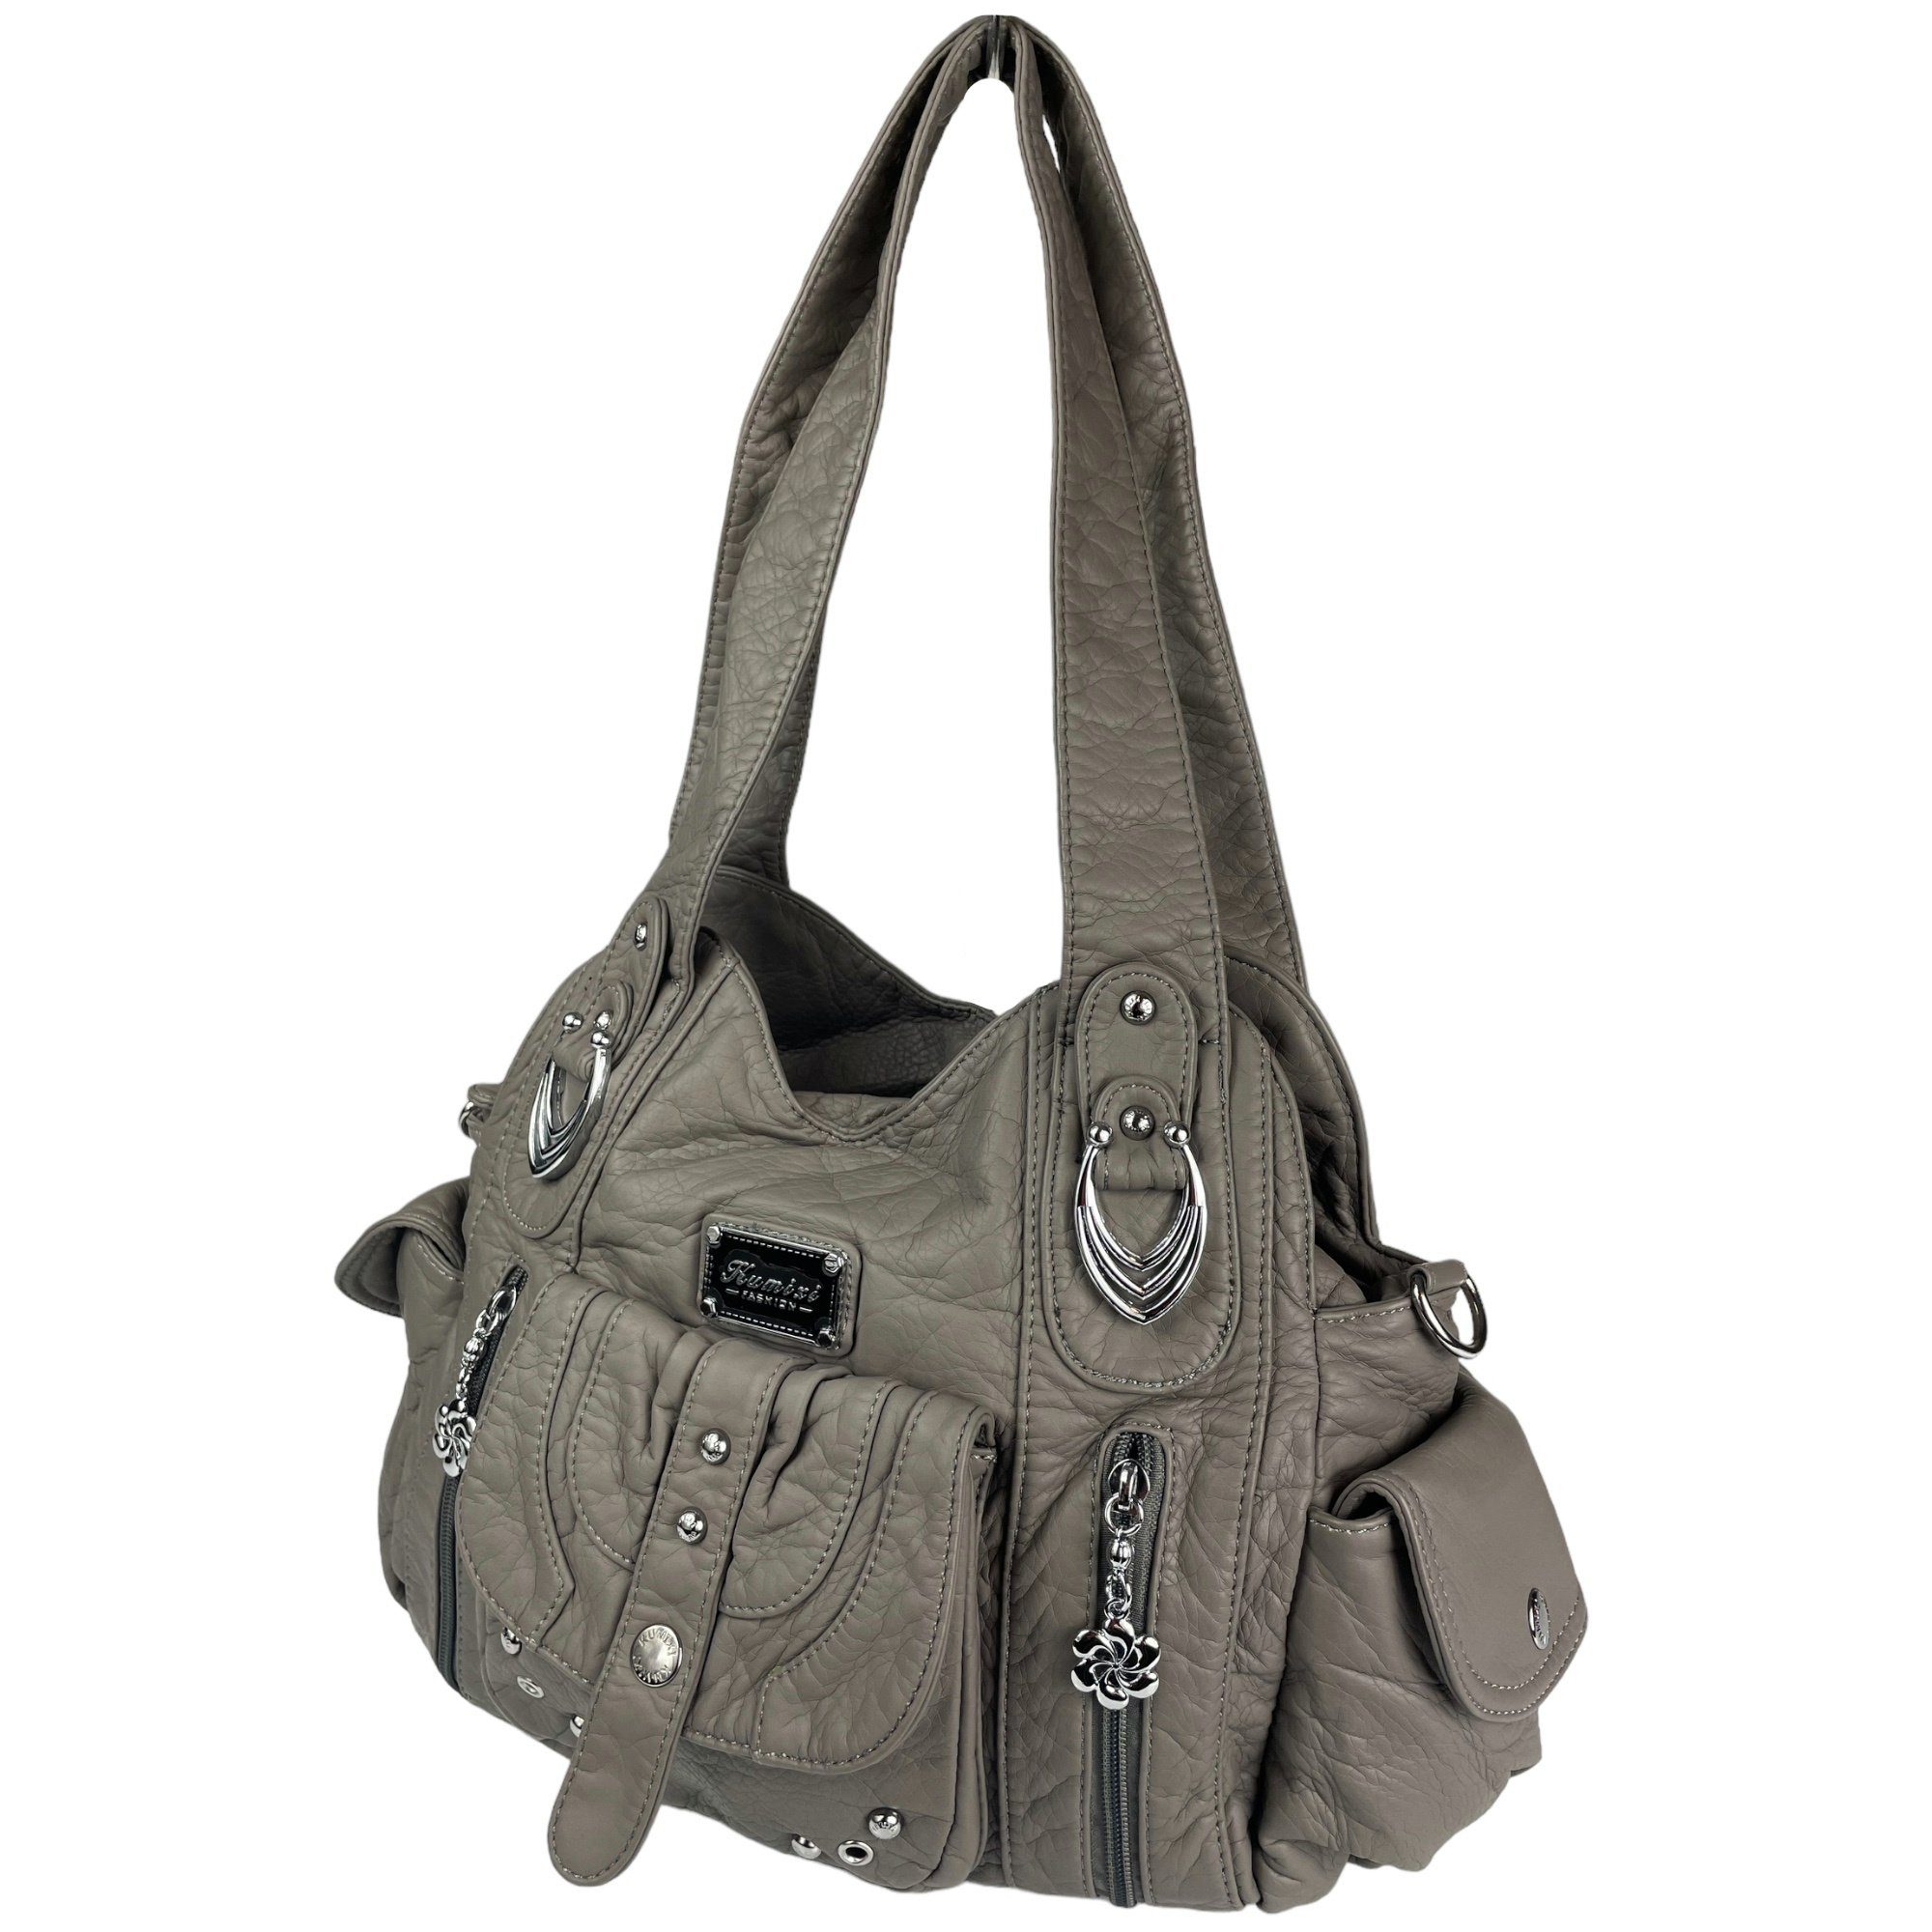 AKW22026, Handtasche abnehmbarer Schultertasche grau lange & Tragegriffe Schulterriemen, Taschen4life Damen Schultertasche